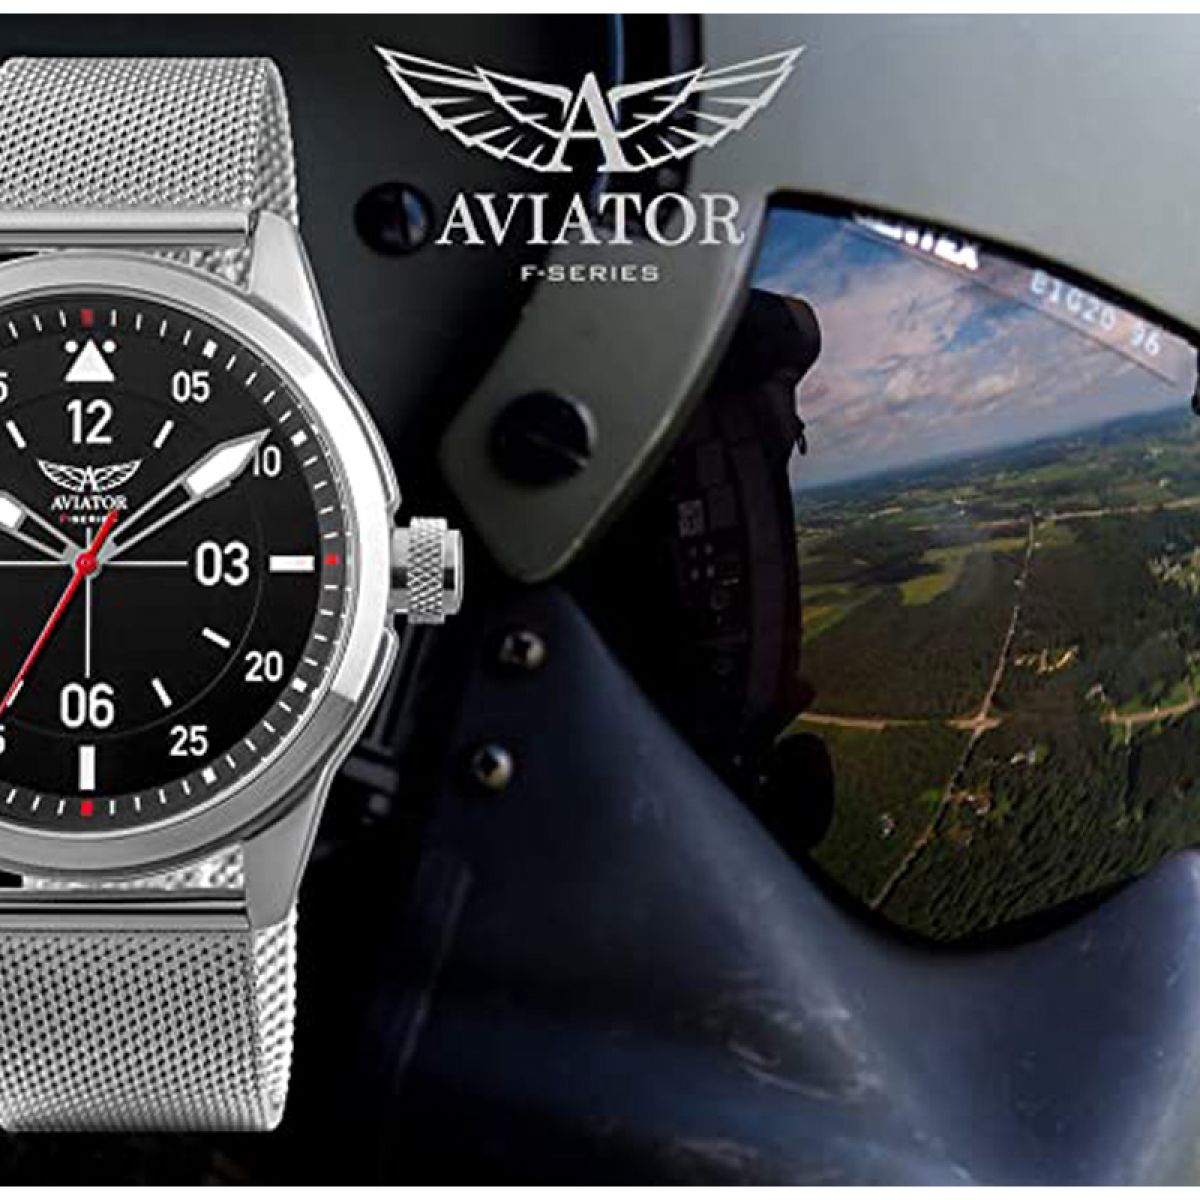 Aviator F-Series | AVW78531G414